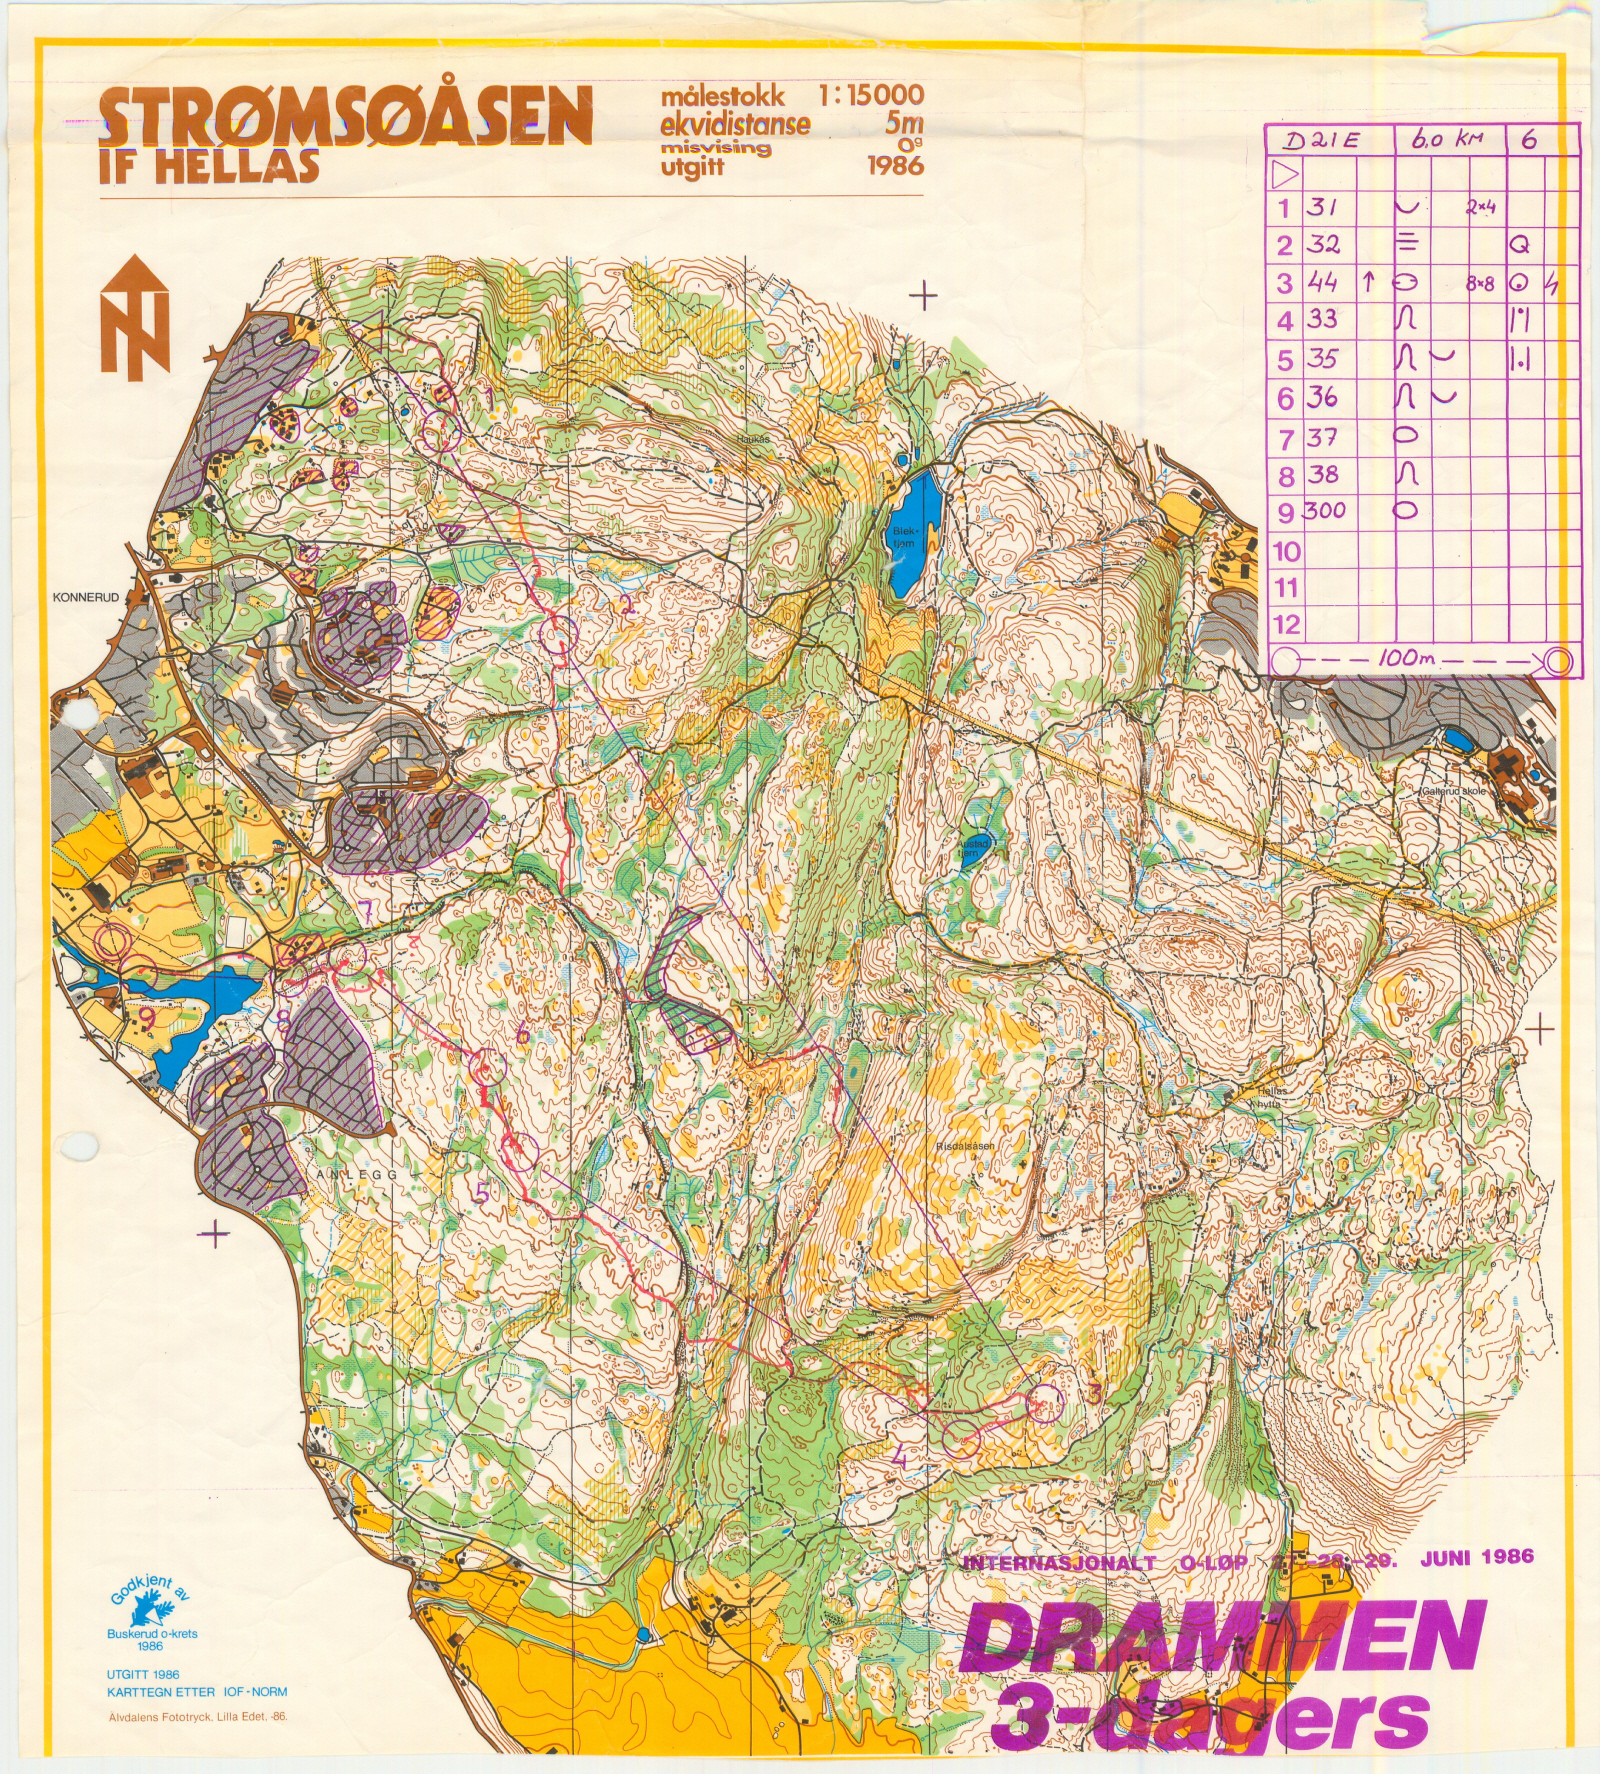 Drammen 3-dagers etappe 2 (28-06-1986)